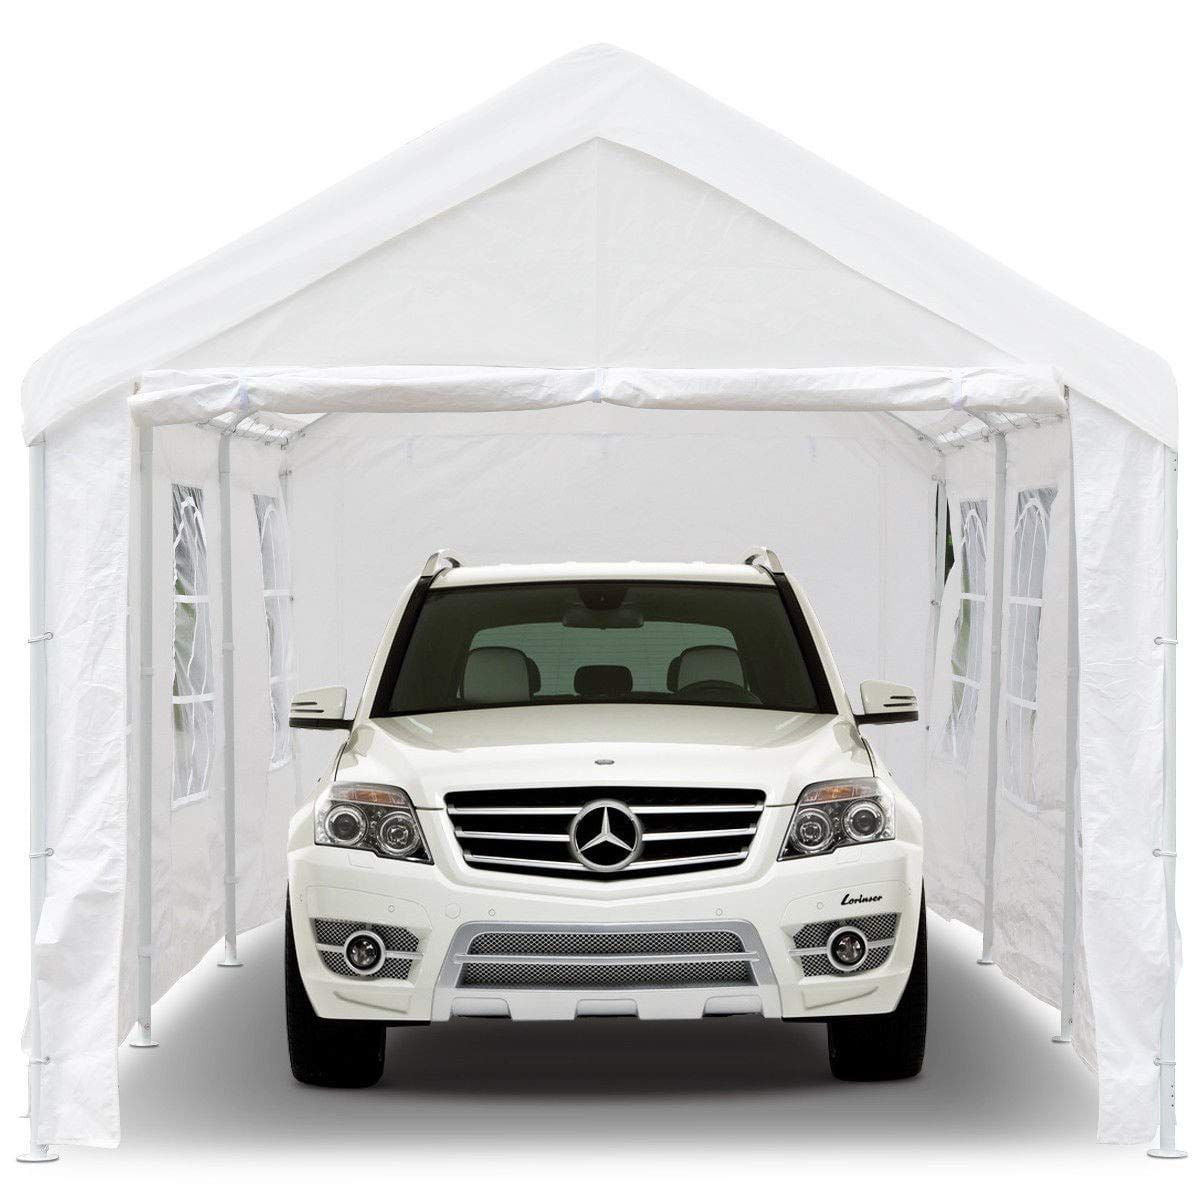 20x10' Waterproof Fair Shelter Car Canopy Outdoor Wedding Pop Up Tent Heavy Duty